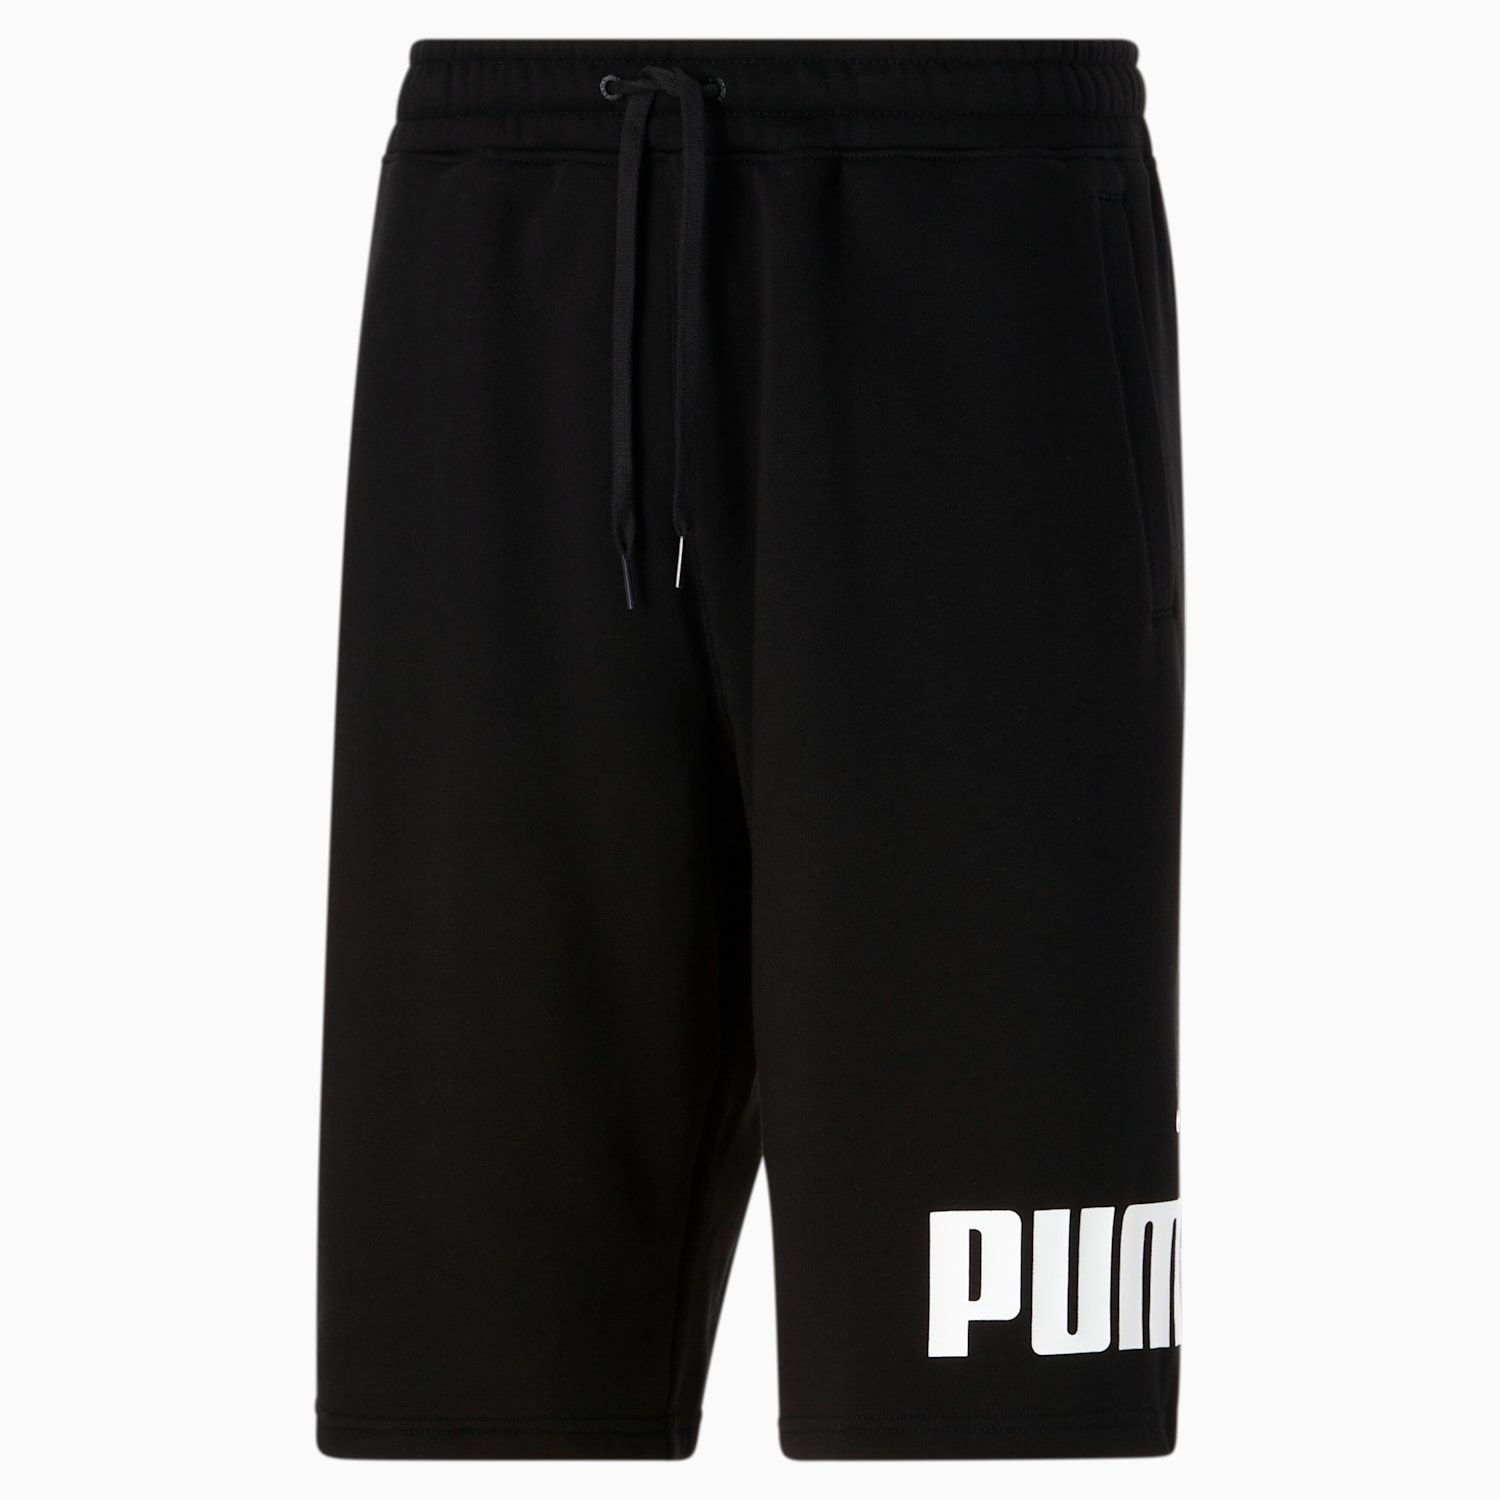 PUMA Logo Men's 10" Shorts